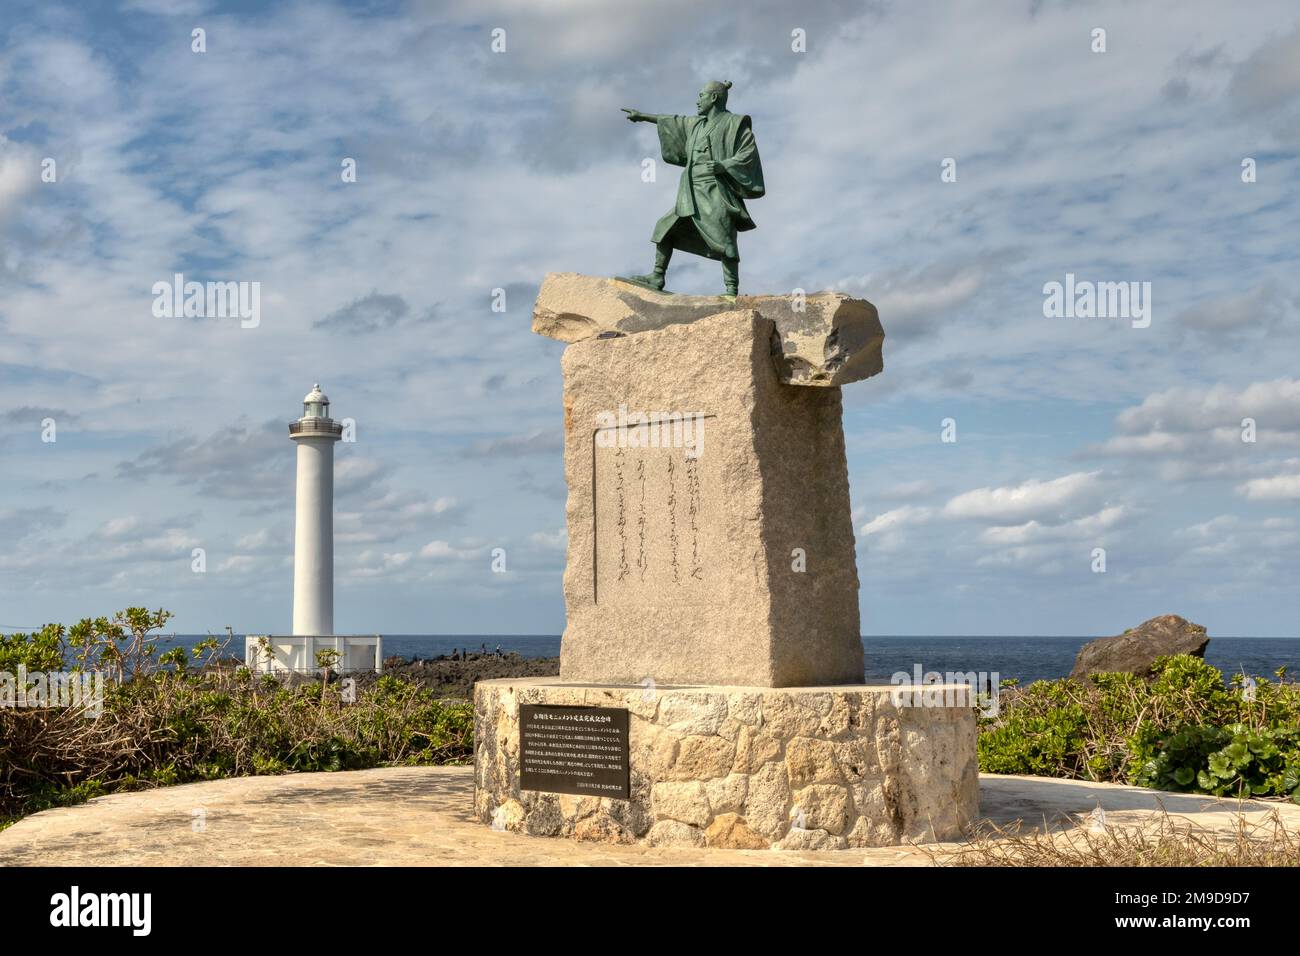 Taiki Statue pointing towards Fujian Province in China stands near Cape Zanpa Lighthouse in Okinawa, Japan Stock Photo